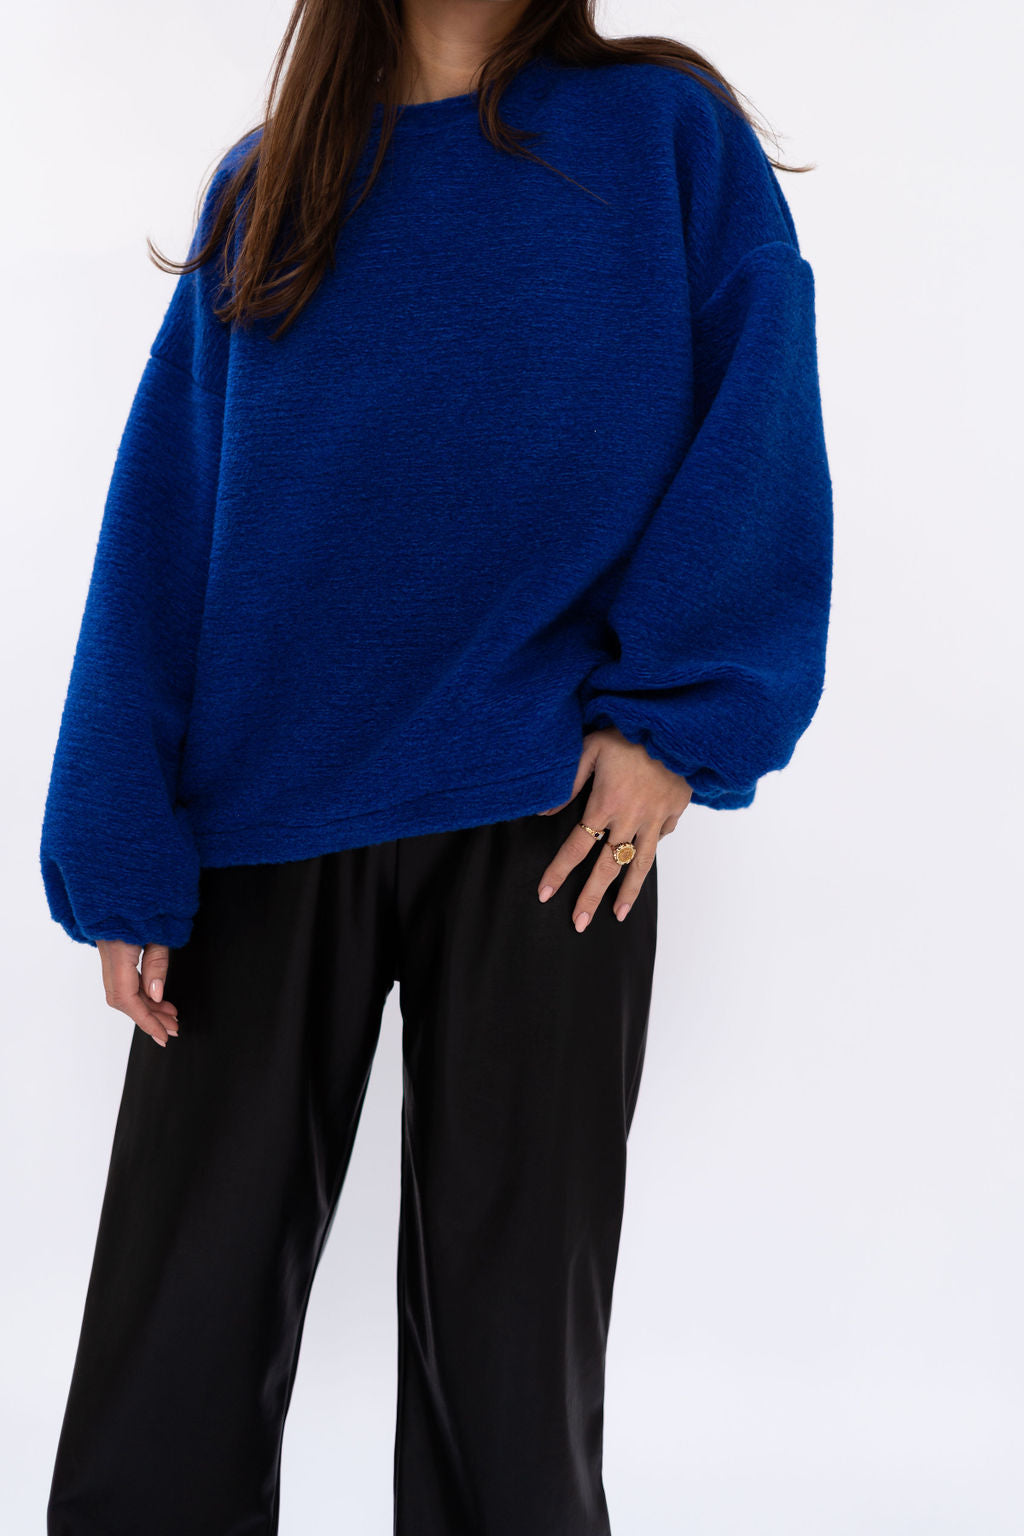 Javi sweater - blue